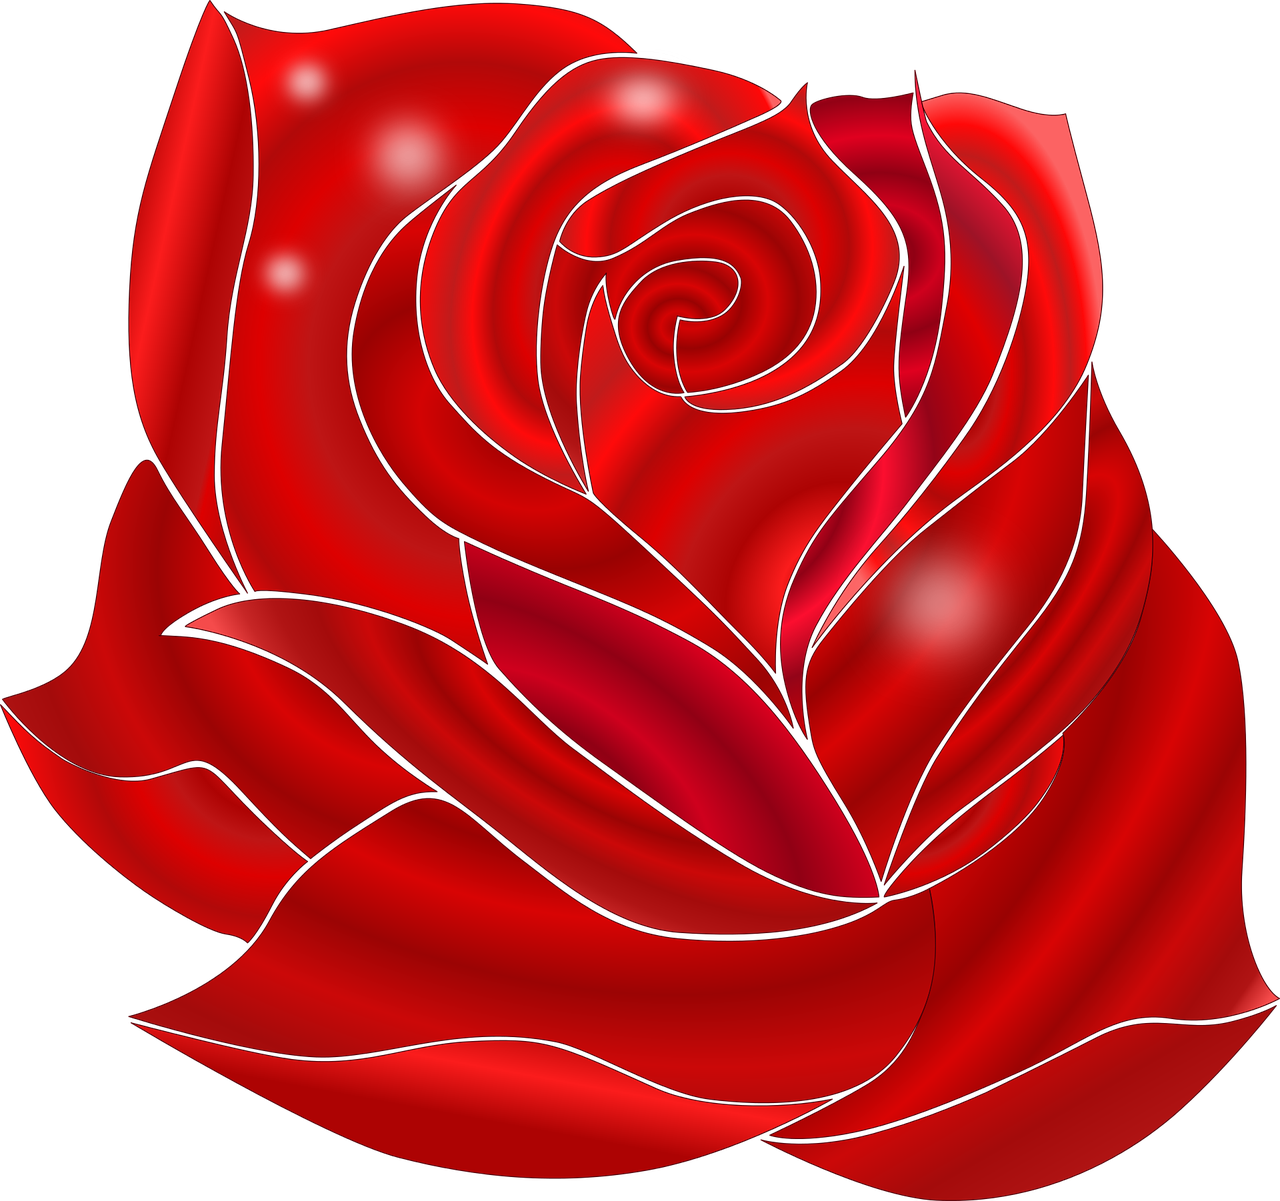 Download - Make Draw A Rose (1280x1201)